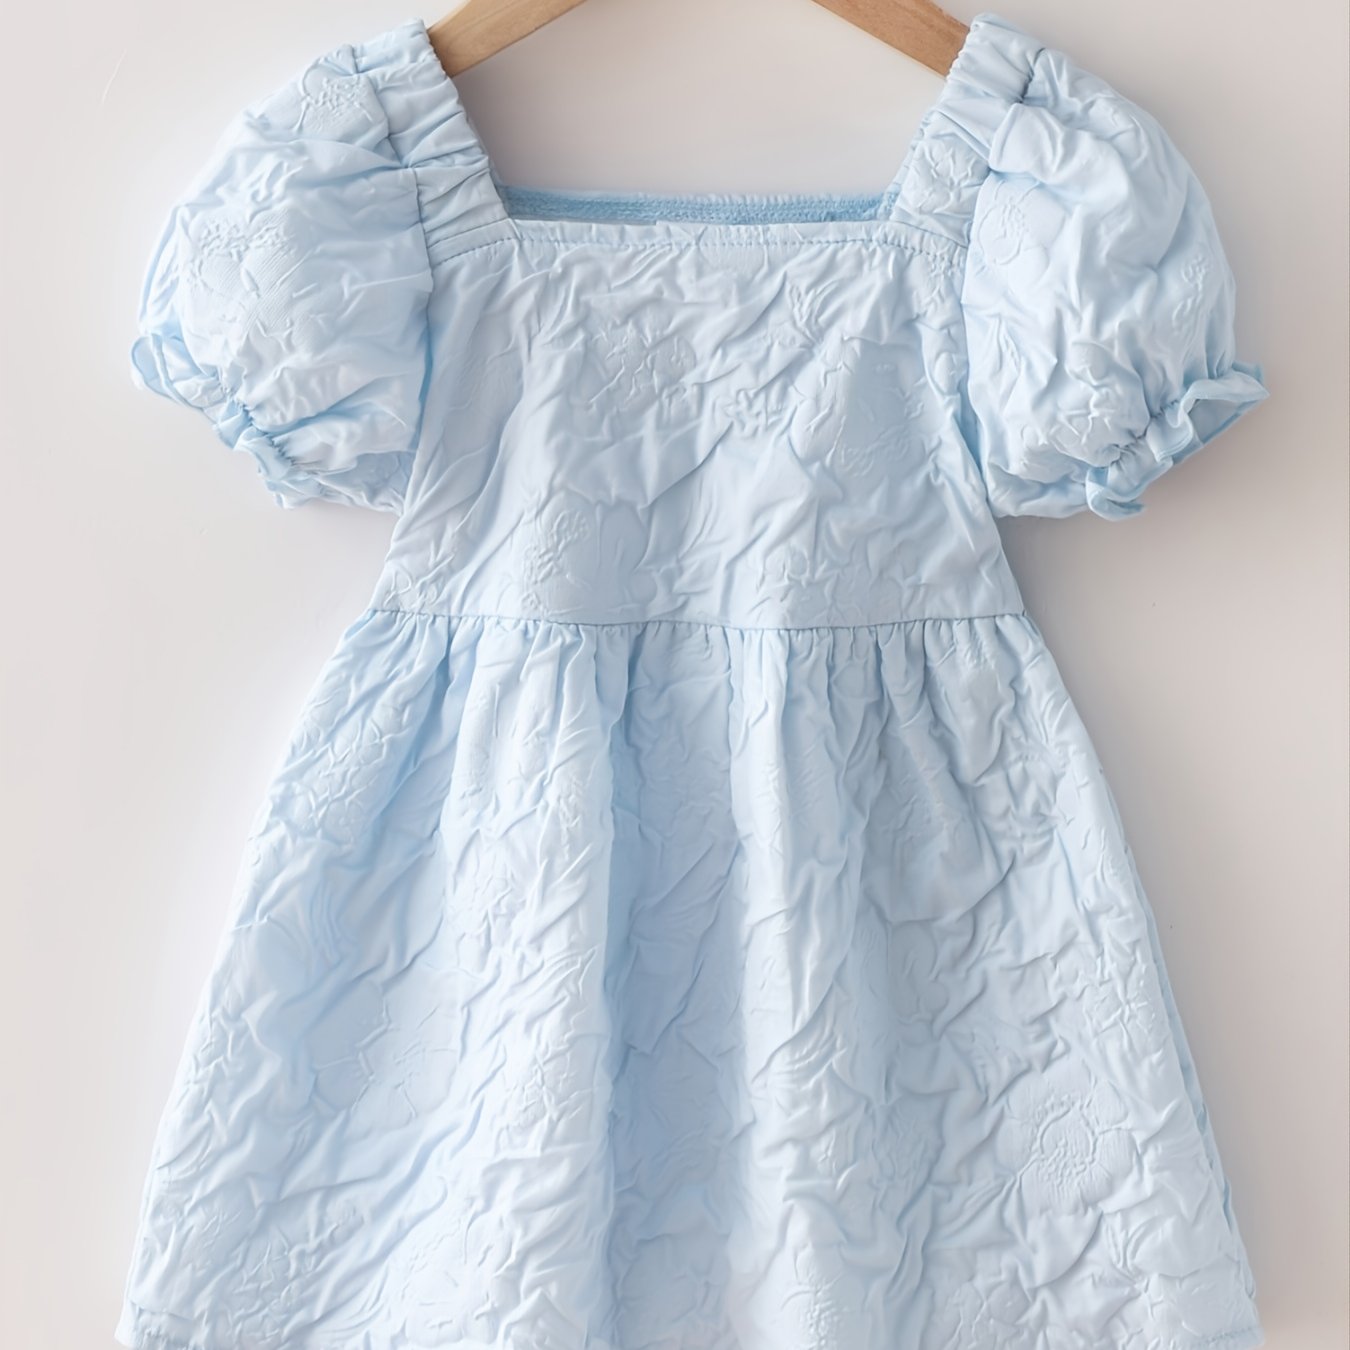 Cute blue Puff Sleeve Dress for Baby Girls